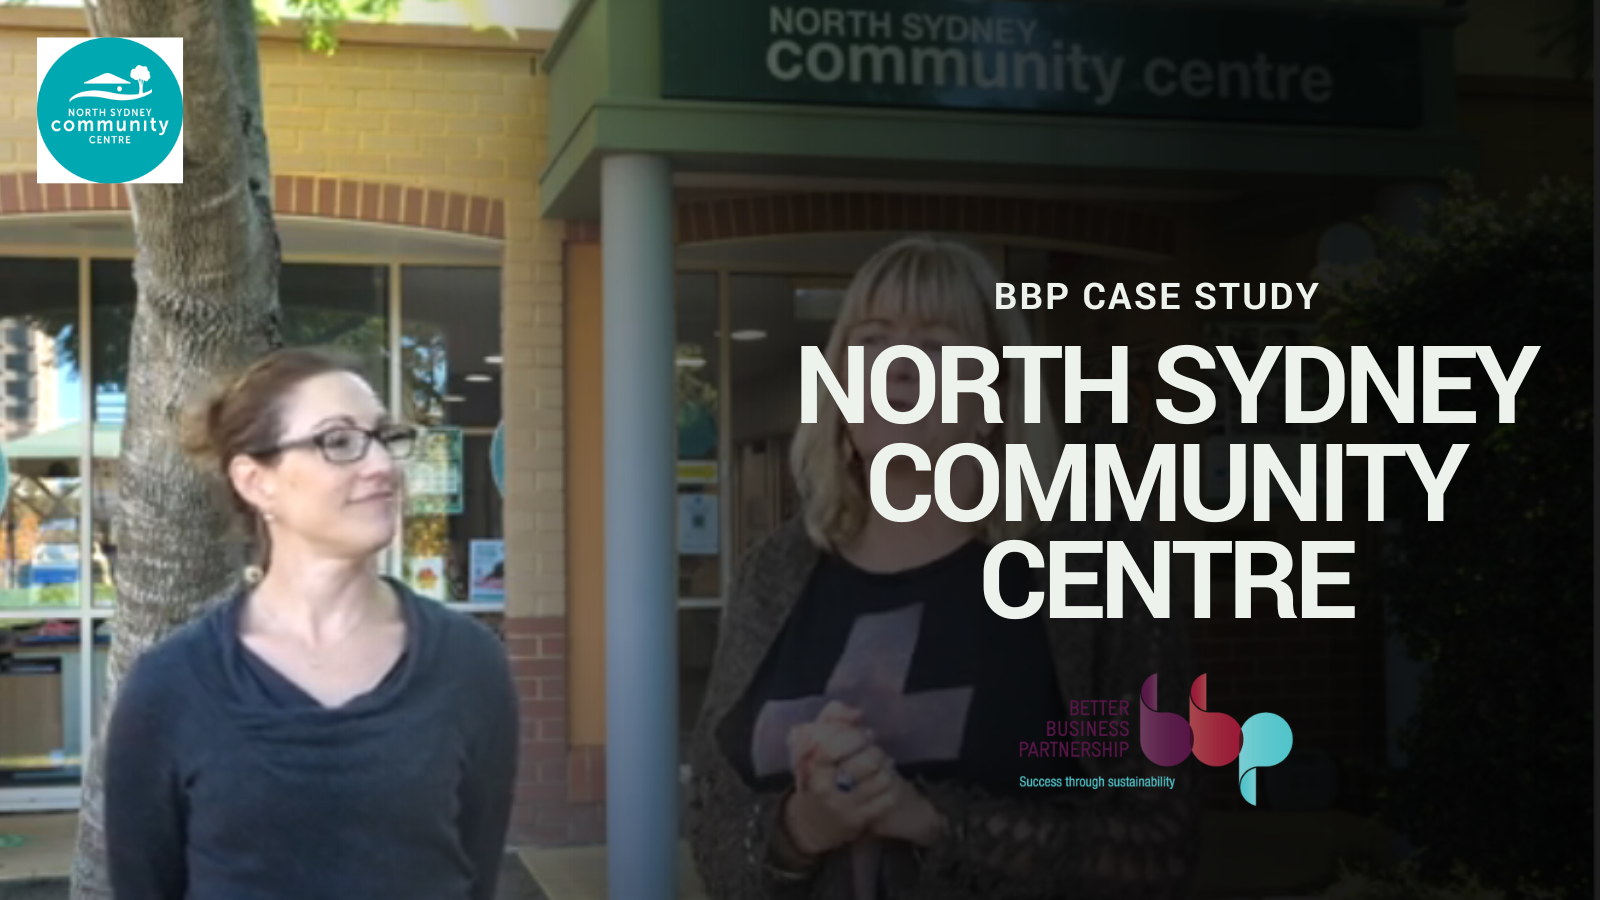 North Sydney Community Centre